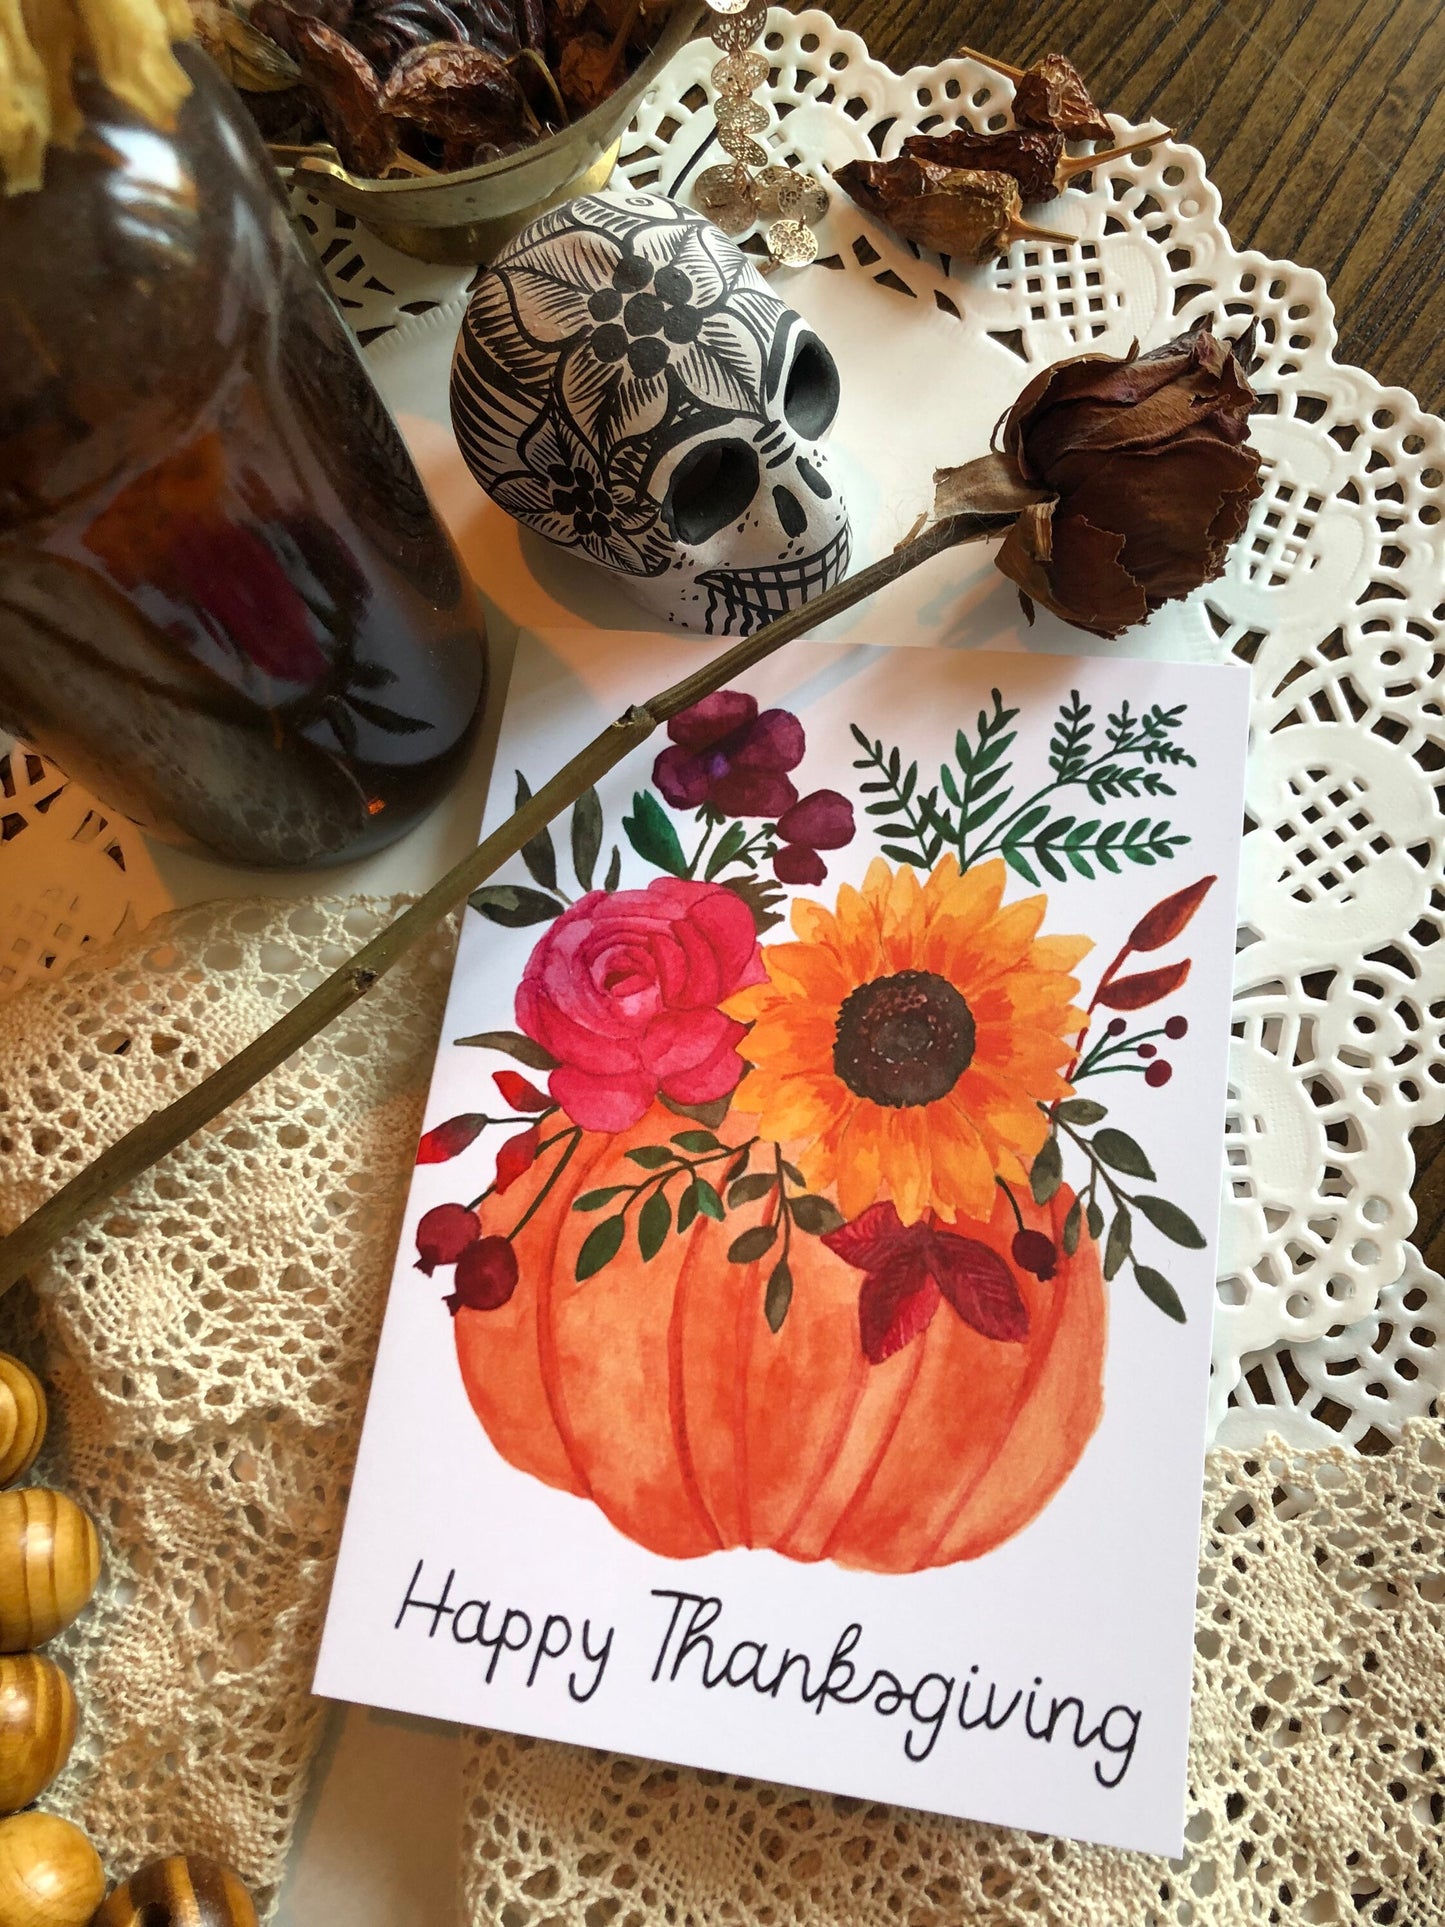 Pumpkin Floral Arrangement - Happy Thanksgiving Card,